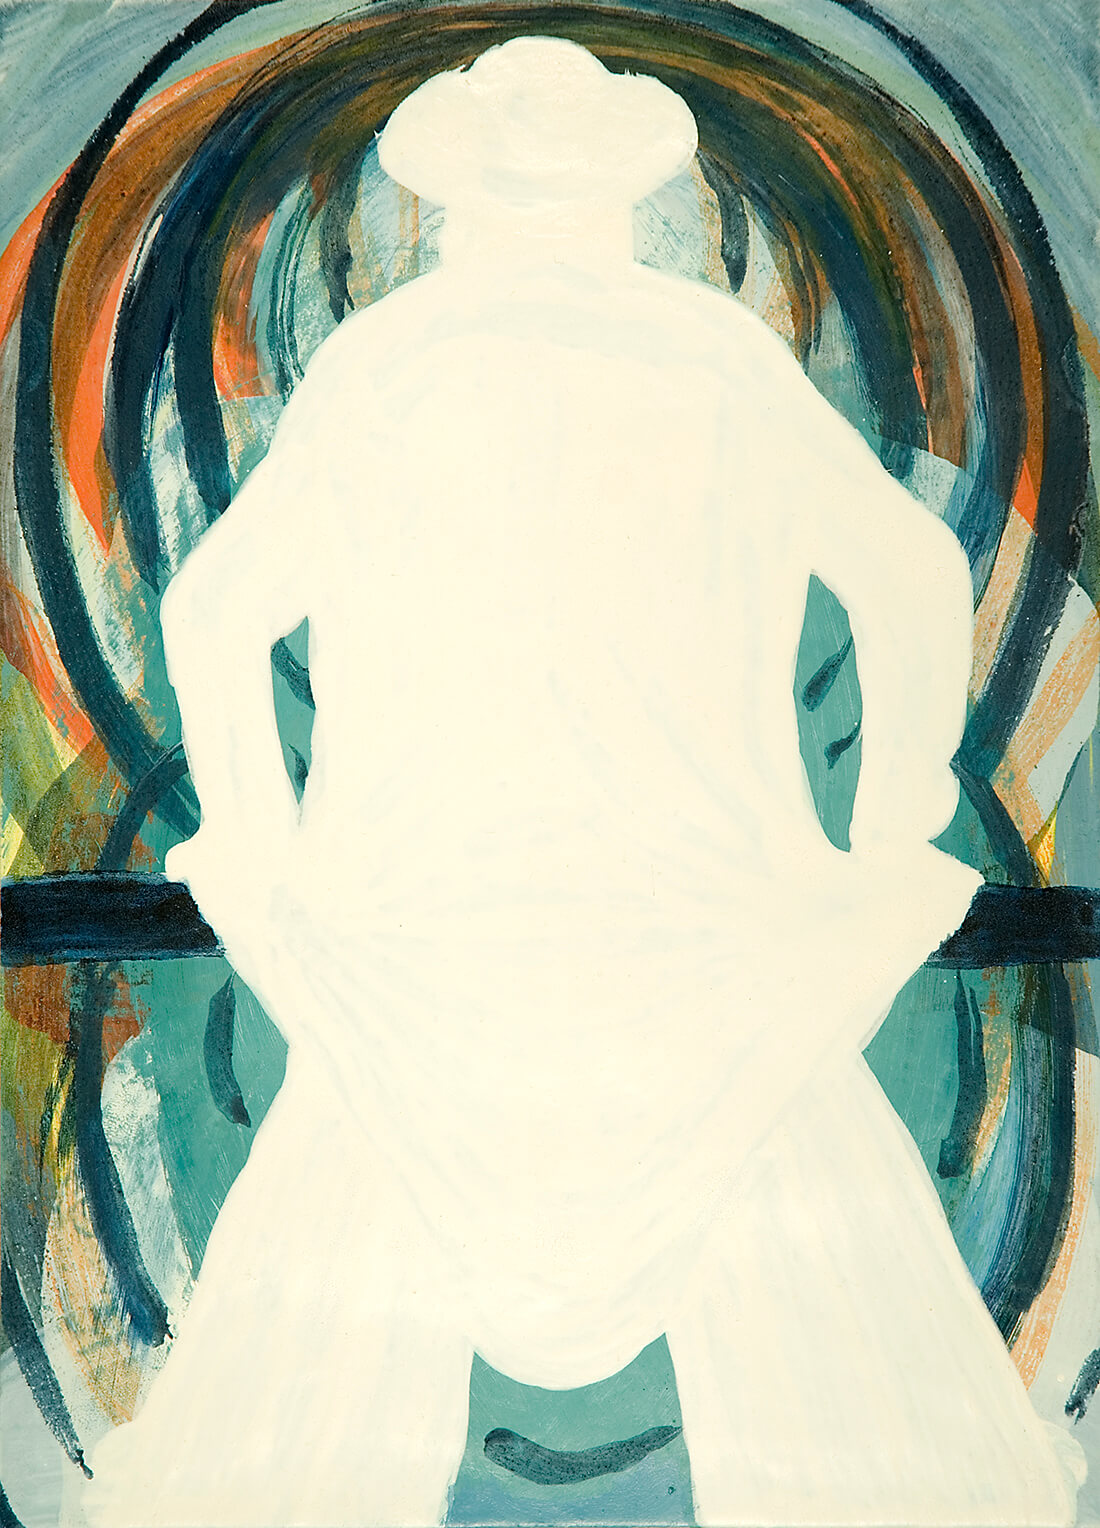 untitled (white Cowboy), 36 x 26 cm, egg tempera on paper, 2009